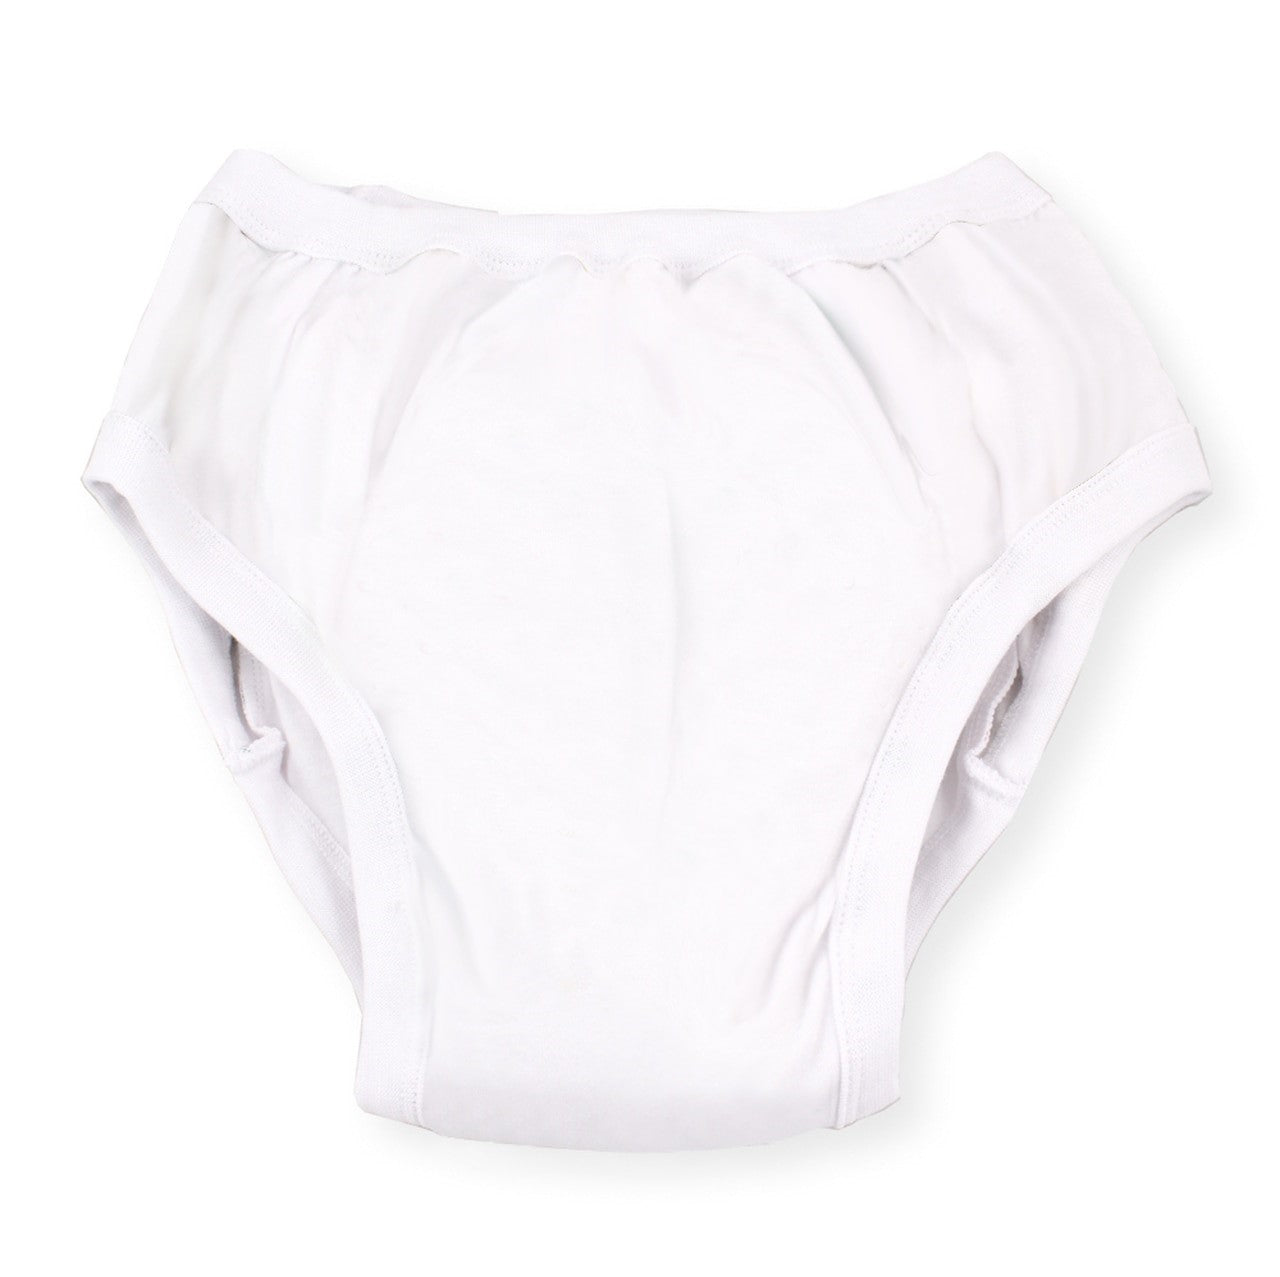 Adult Training Pants: White Cloud – Protex